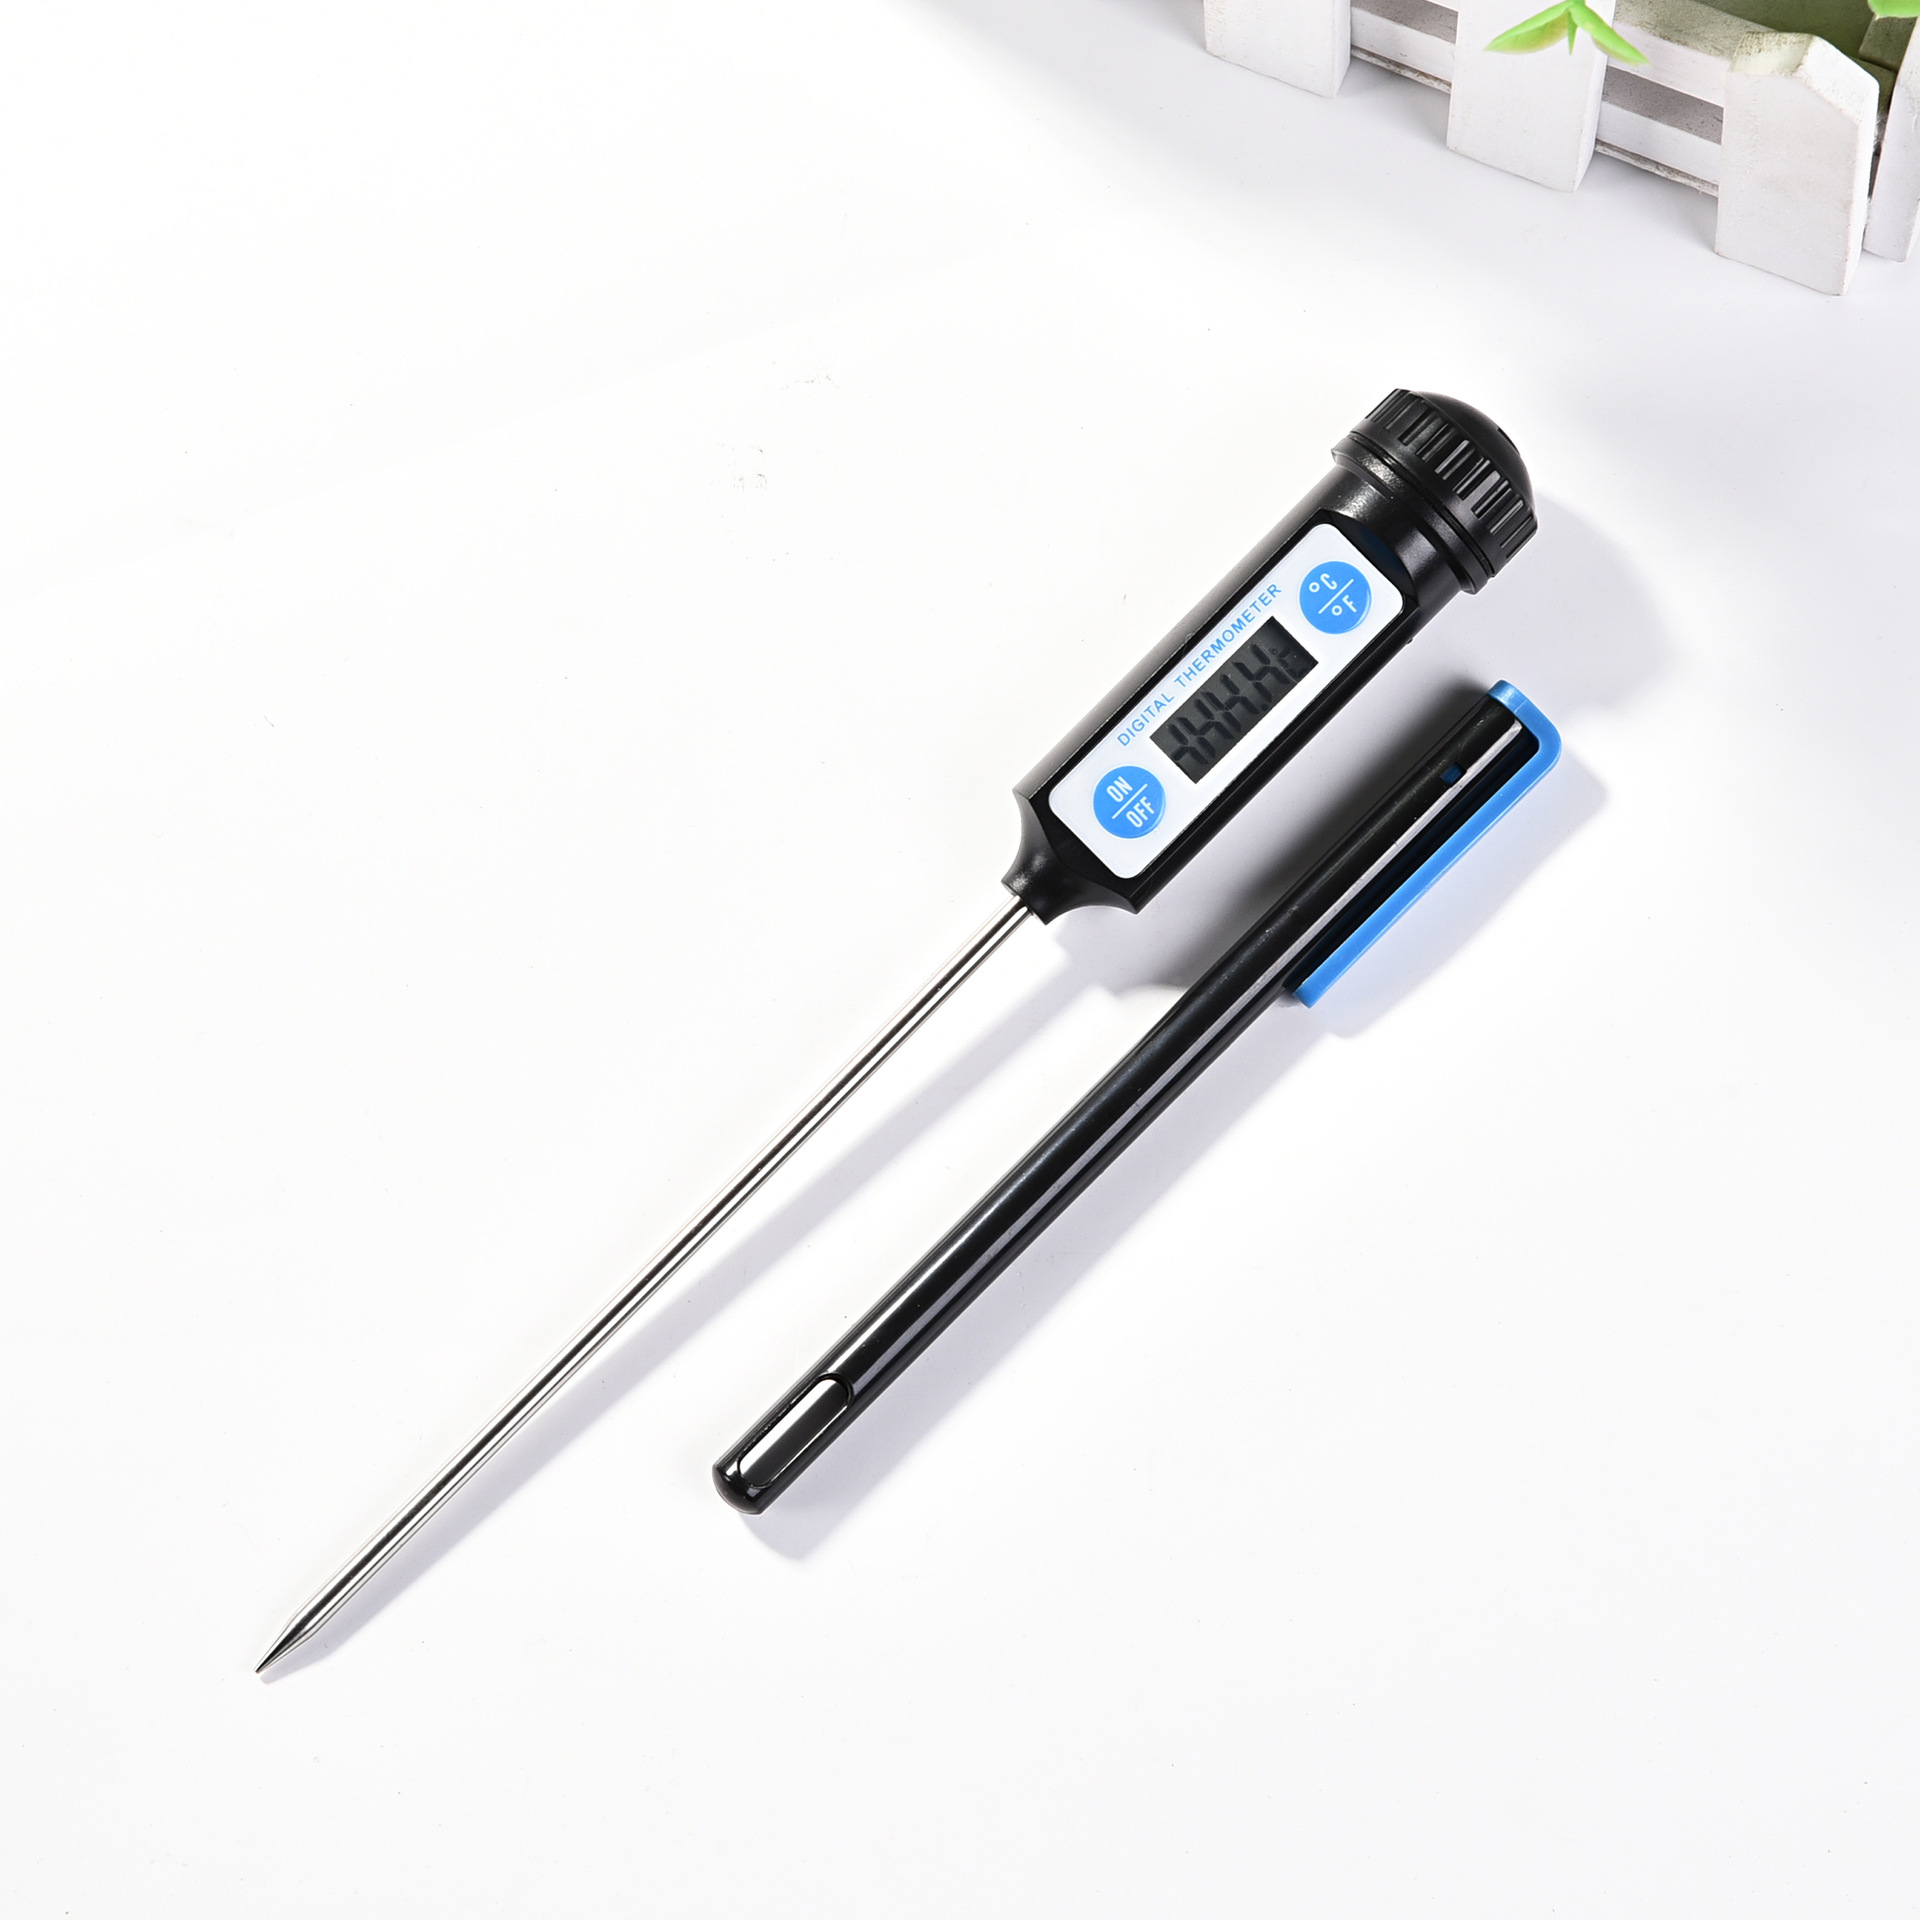 YH-JR1 Portable Electronic Probe Kitchen Digital BBQ Thermometer